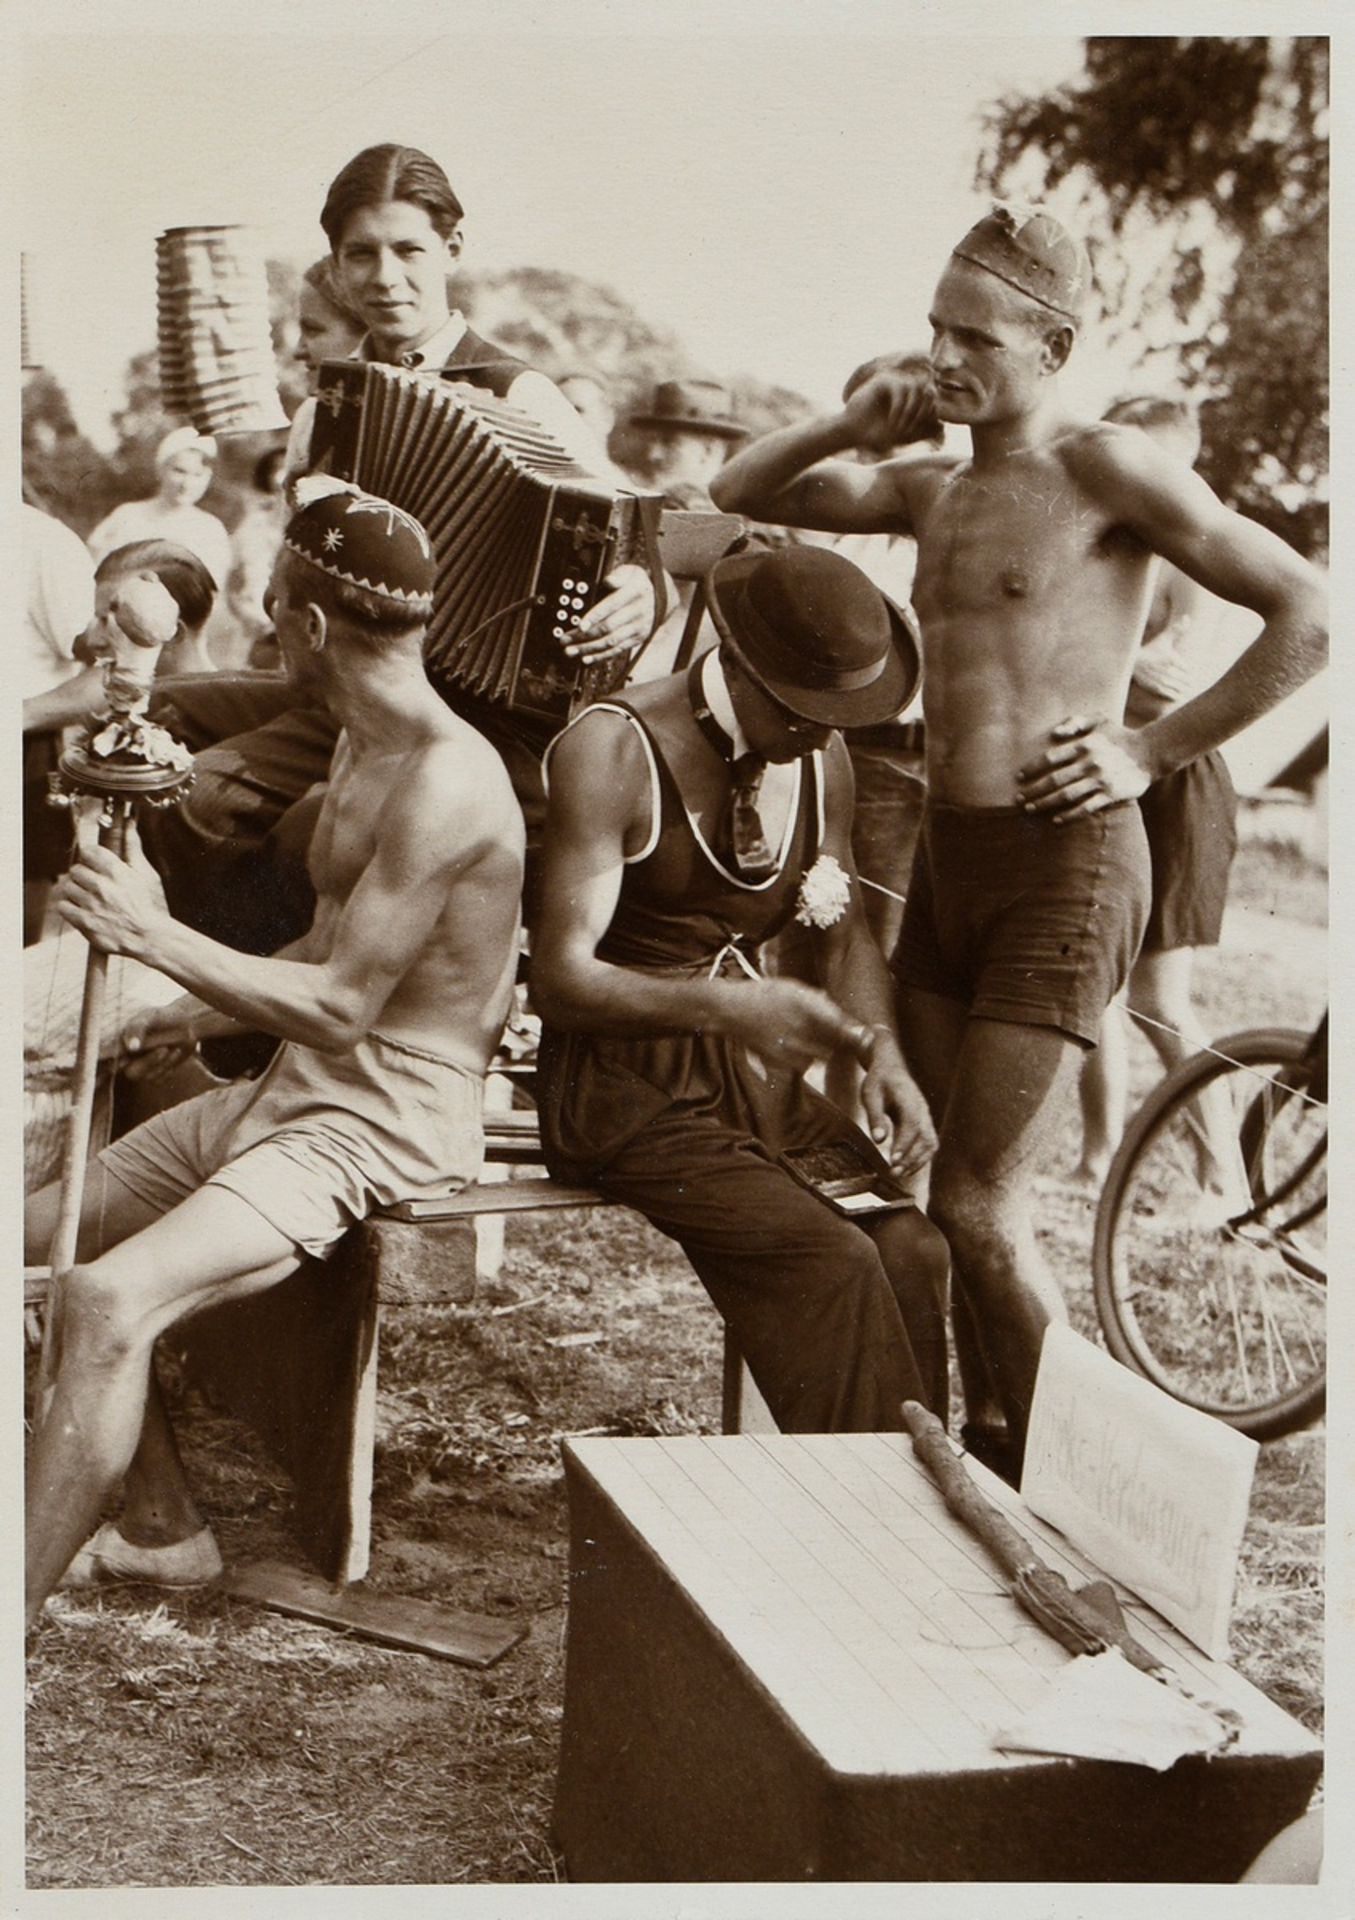 Schorer, Joseph (1894-1946) "Strandfest Blankenese", Fotografie, auf Karton montiert, u. bez., vers